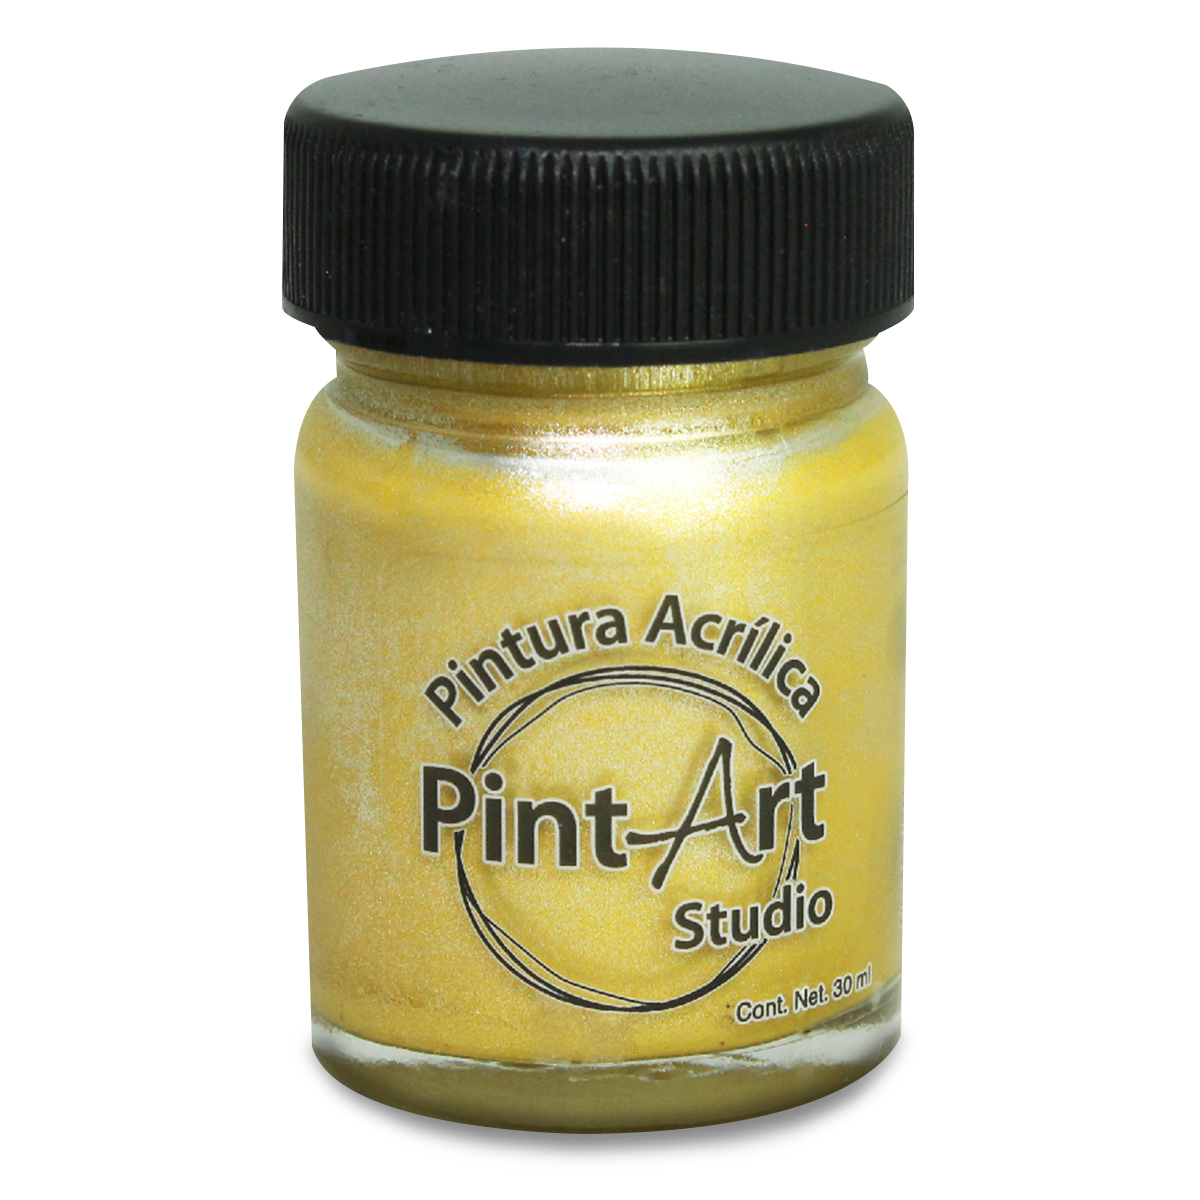 Pintura Acrílica PintArt Studio No.837 / Oro imperial / 1 pieza / 30 ml